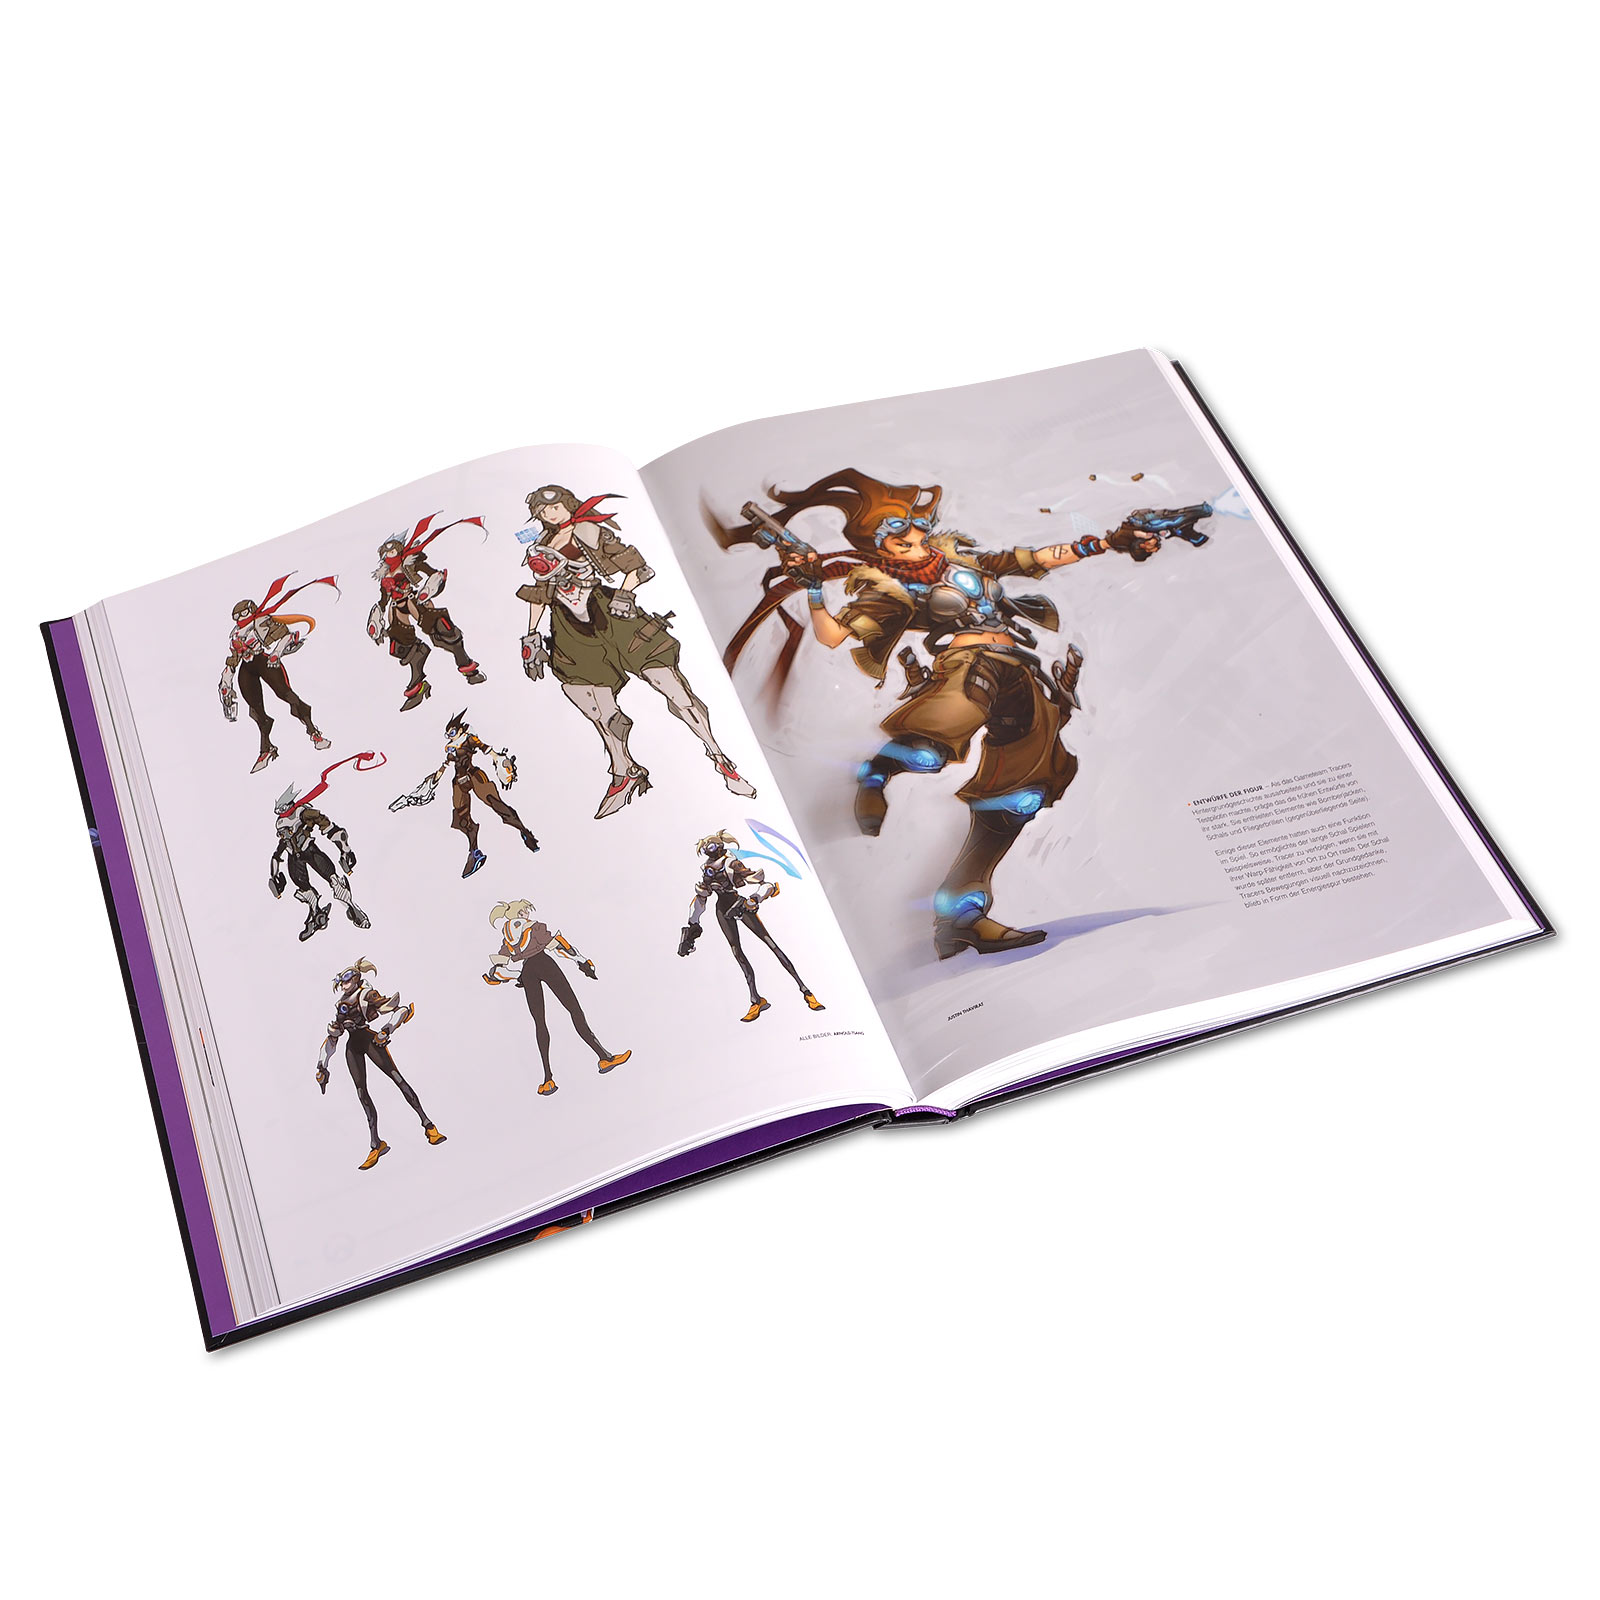 Overwatch Artbook - Hardcover Edition